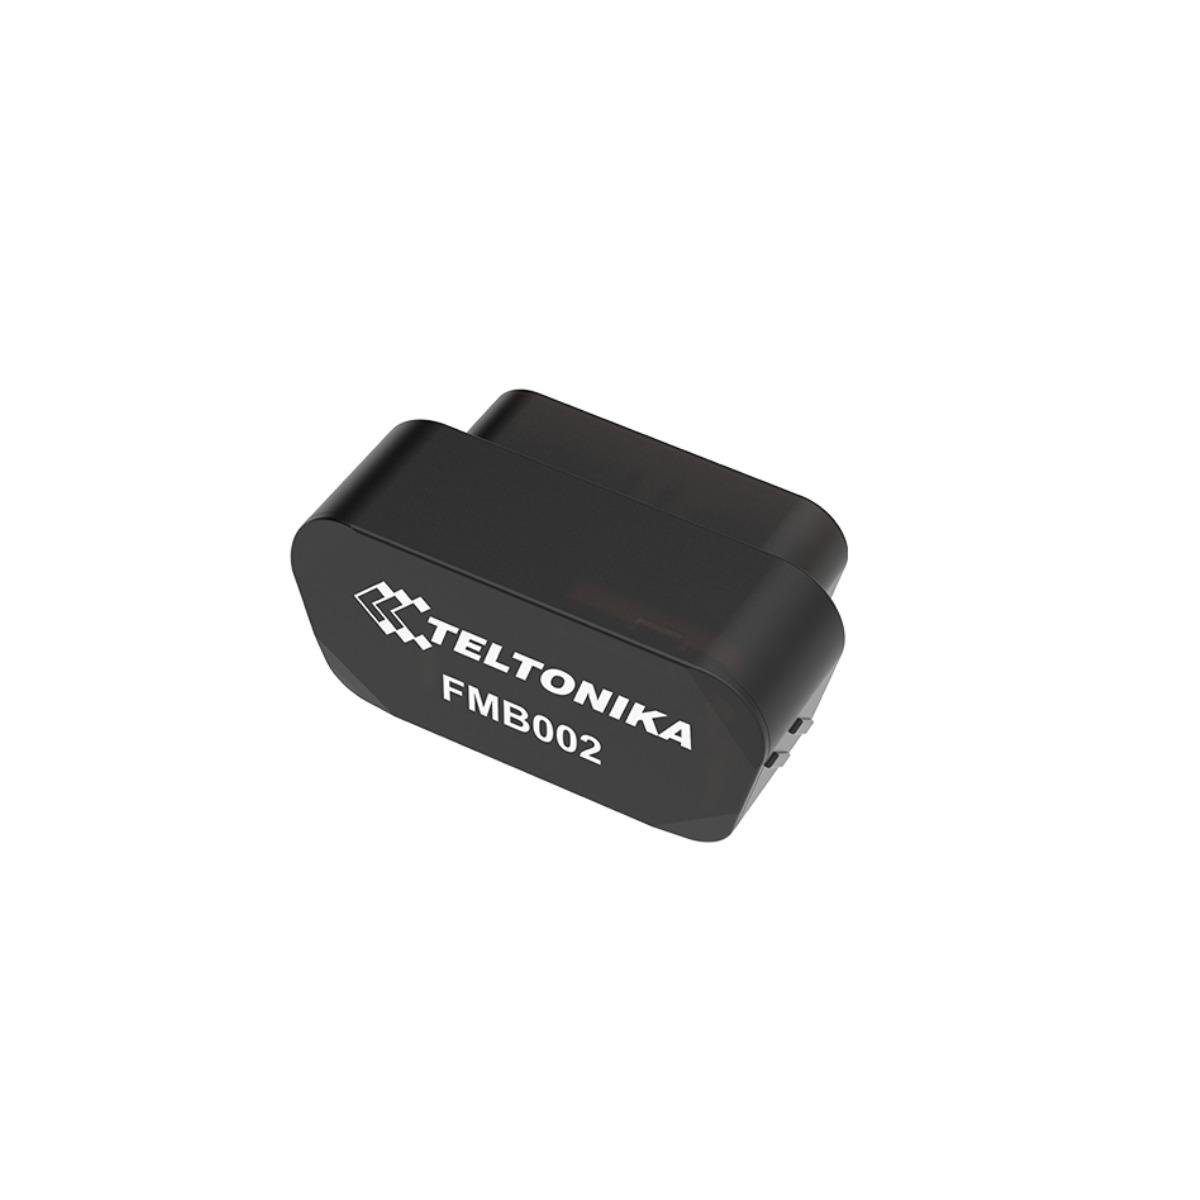 GPS-Tracker FMB002 OBD-Tracker Teltonika - Kleiner